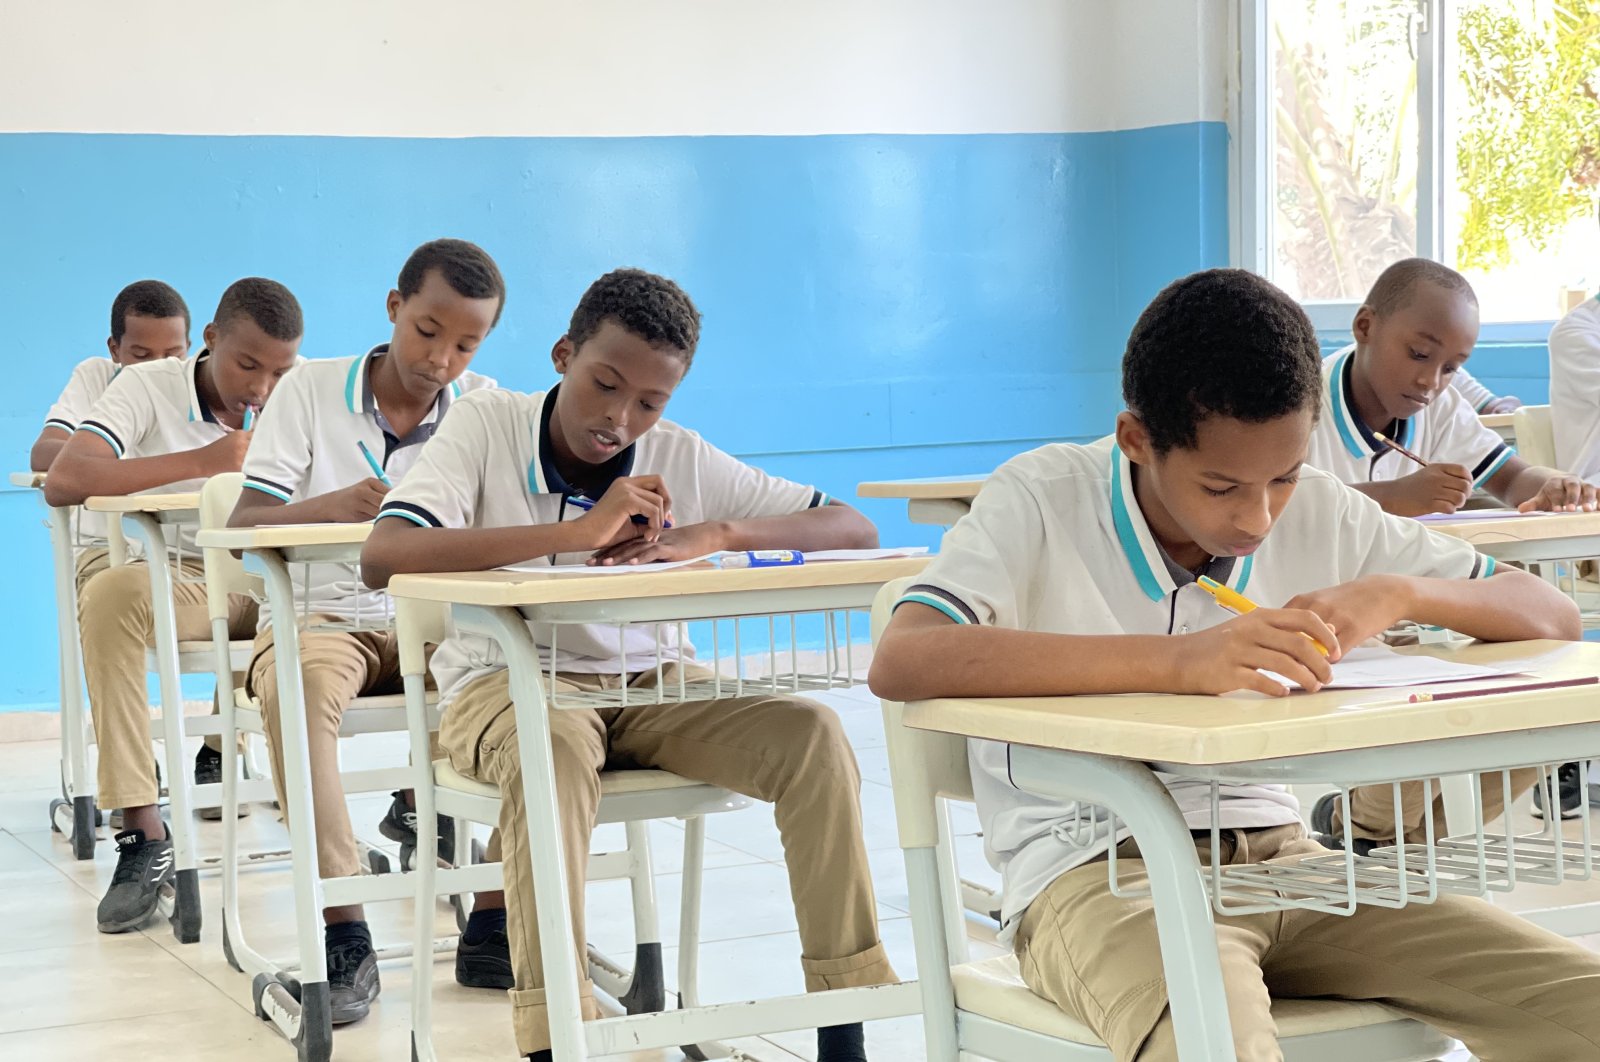 Students in a classroom at a Maarif Foundation school, in Hargaisa, Somaliland, May 21, 2022. (AA PHOTO)